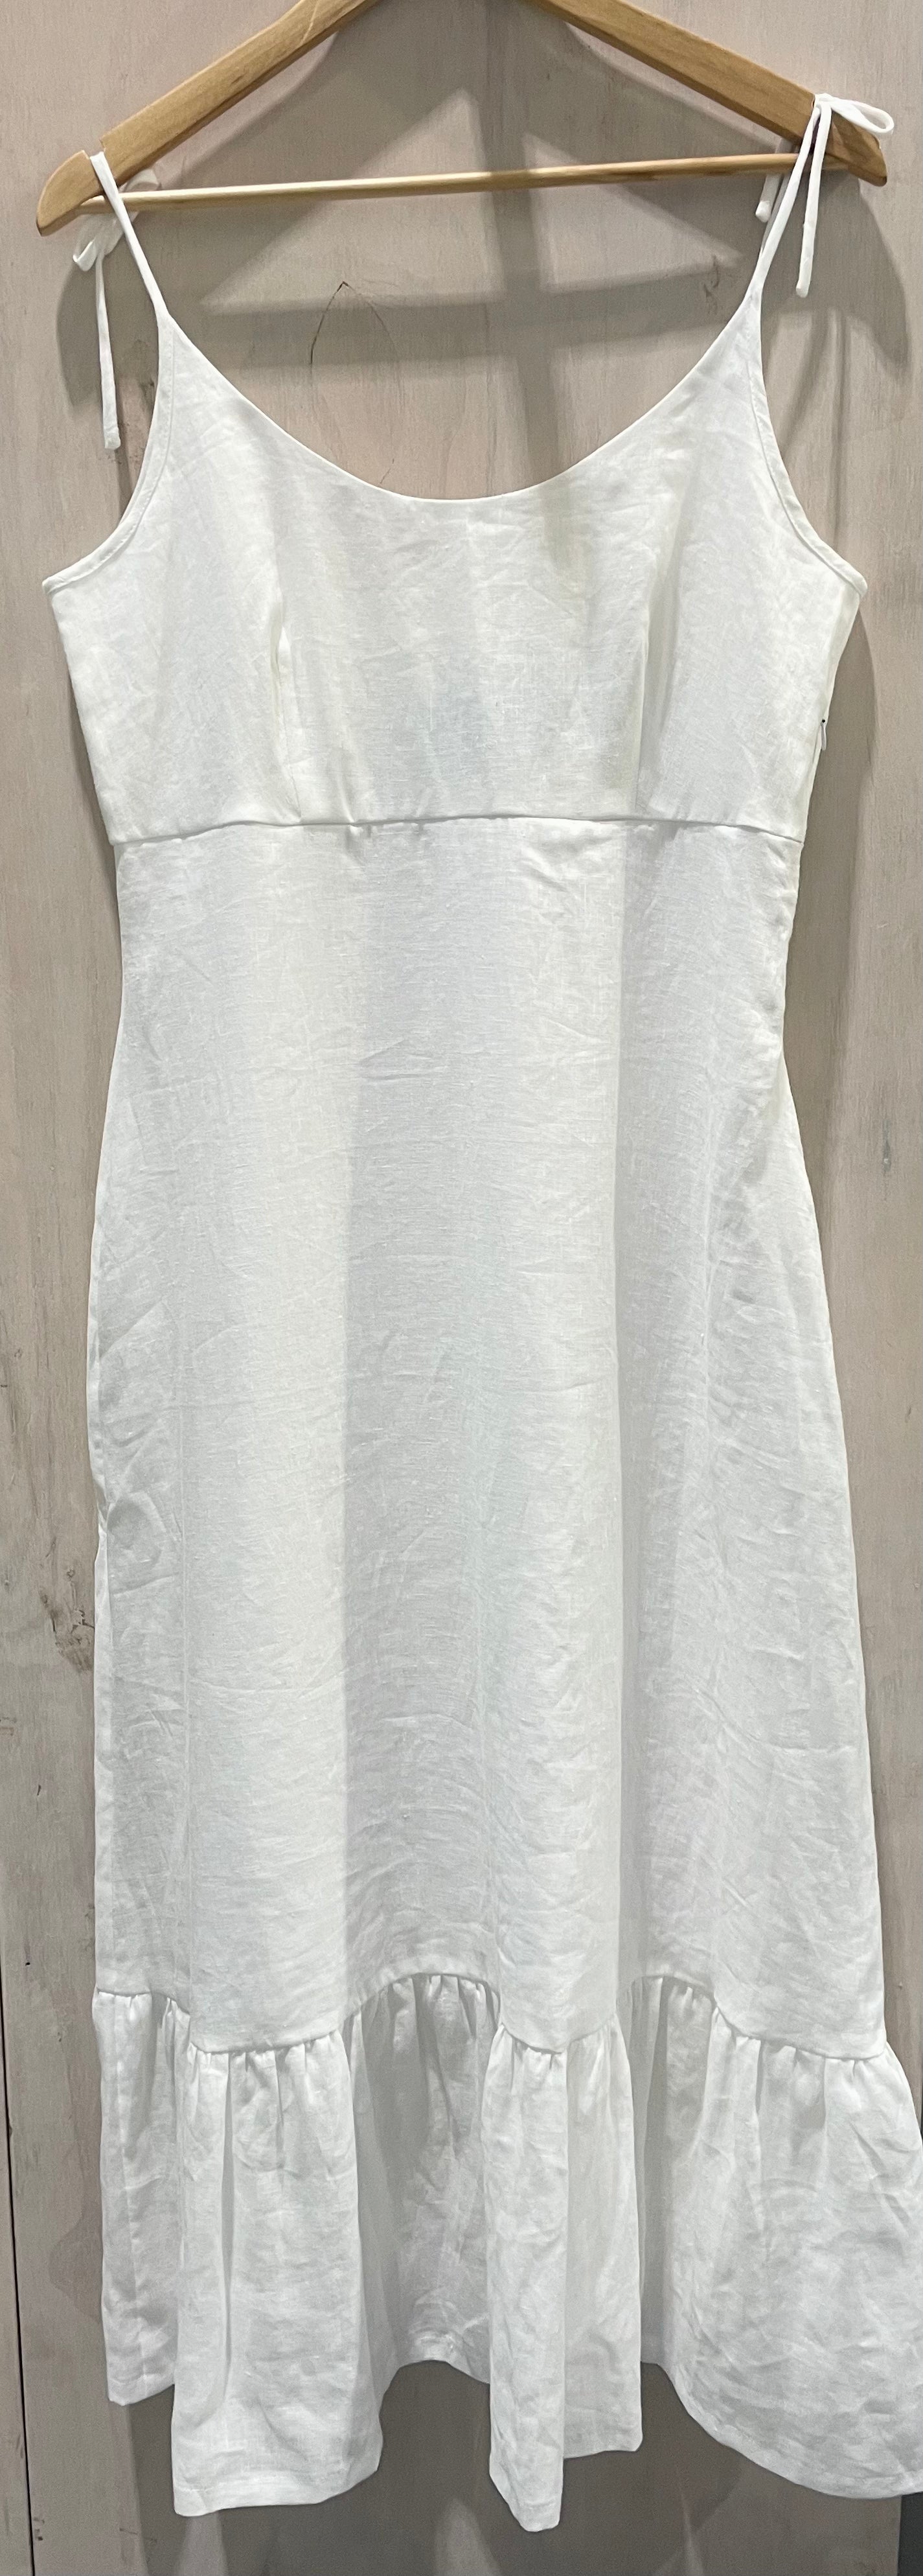 SAMPLE Willow Dress - Linen (SIZE 12)